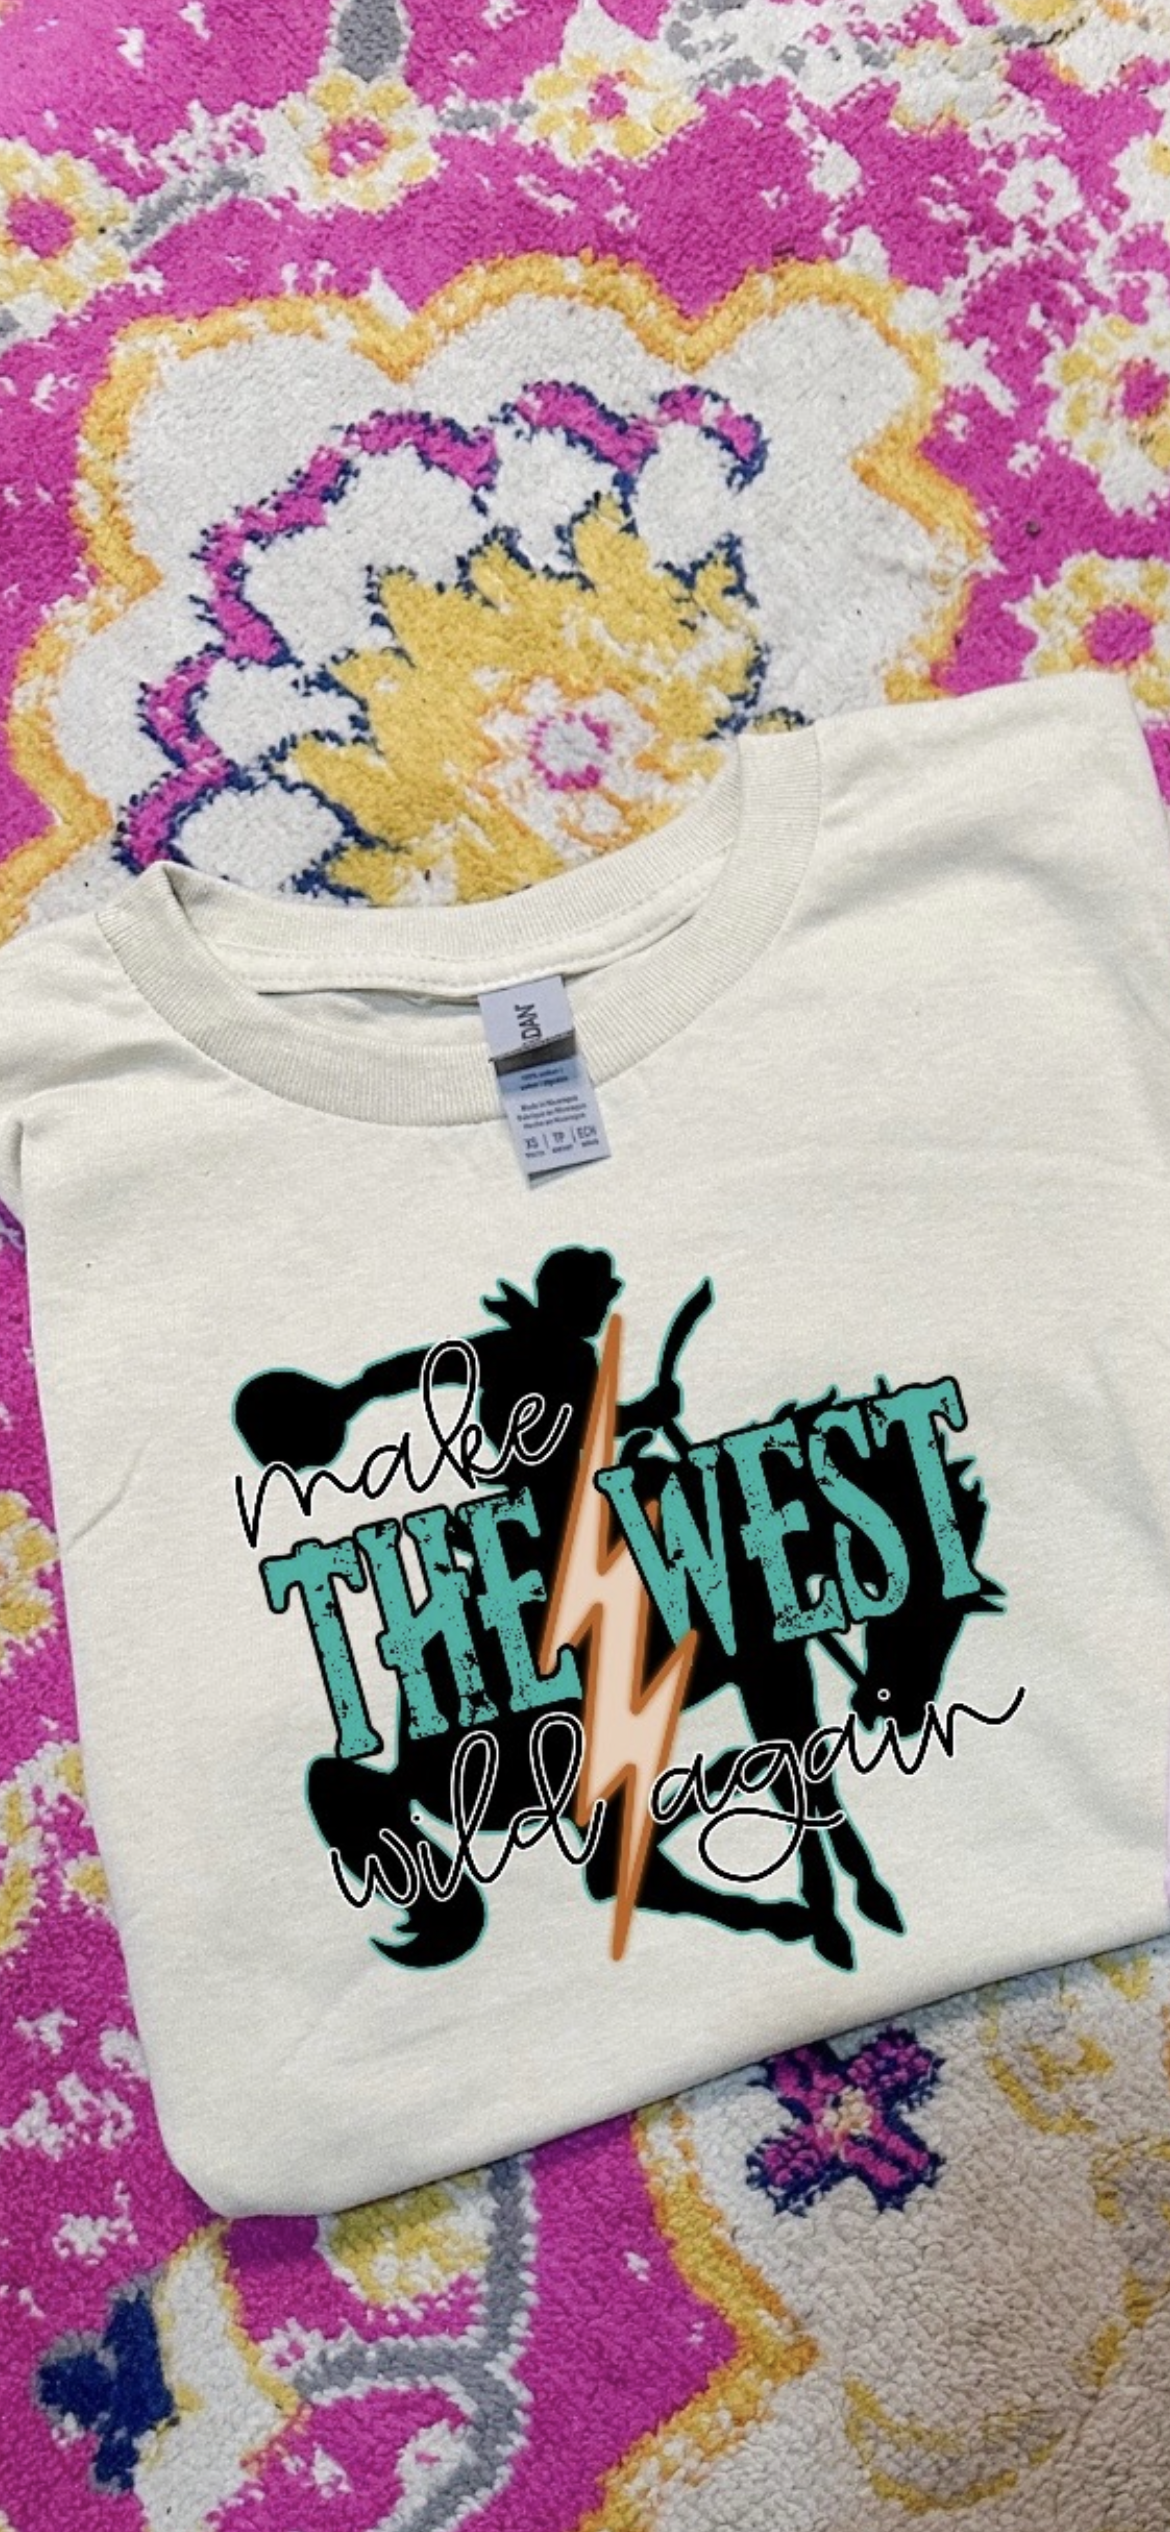 Make the West Wild Again Tee